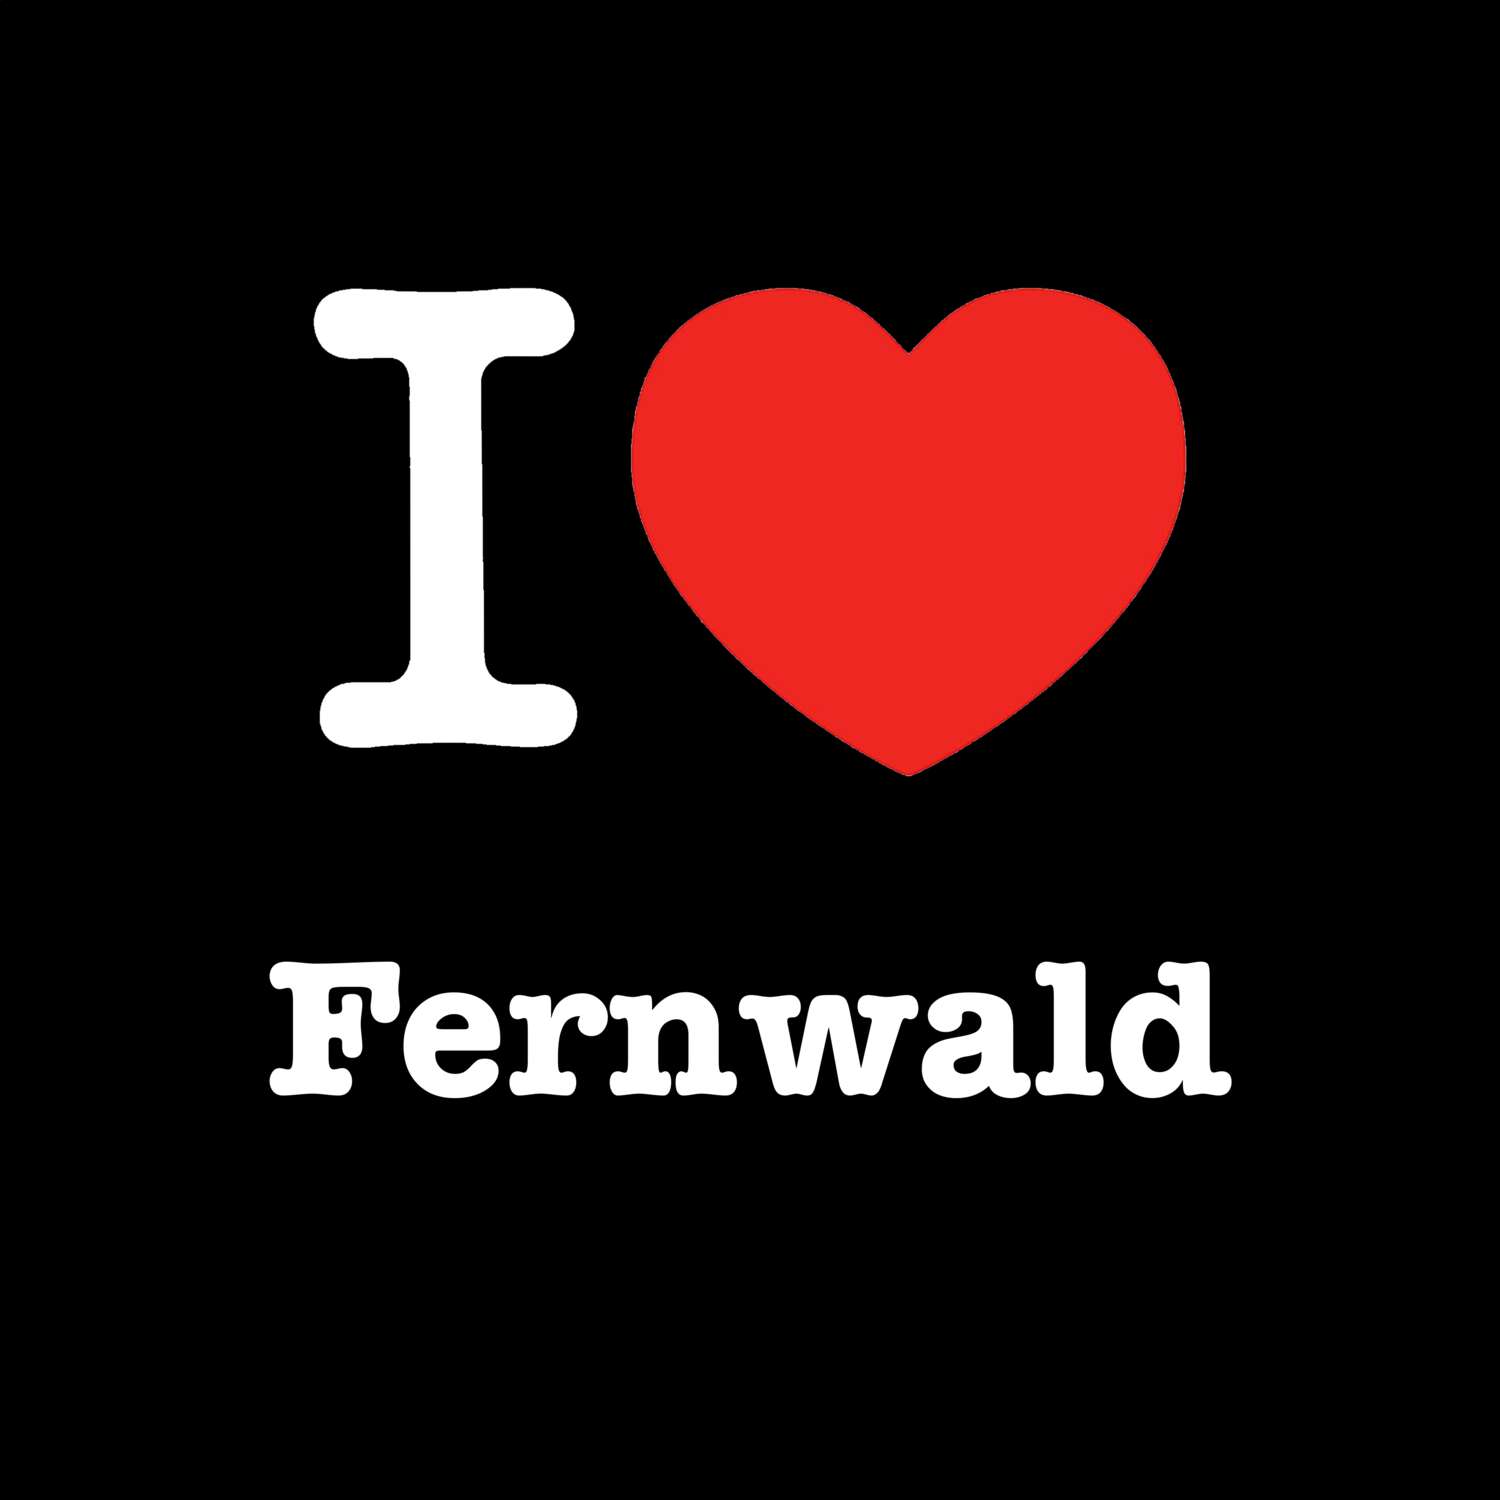 Fernwald T-Shirt »I love«